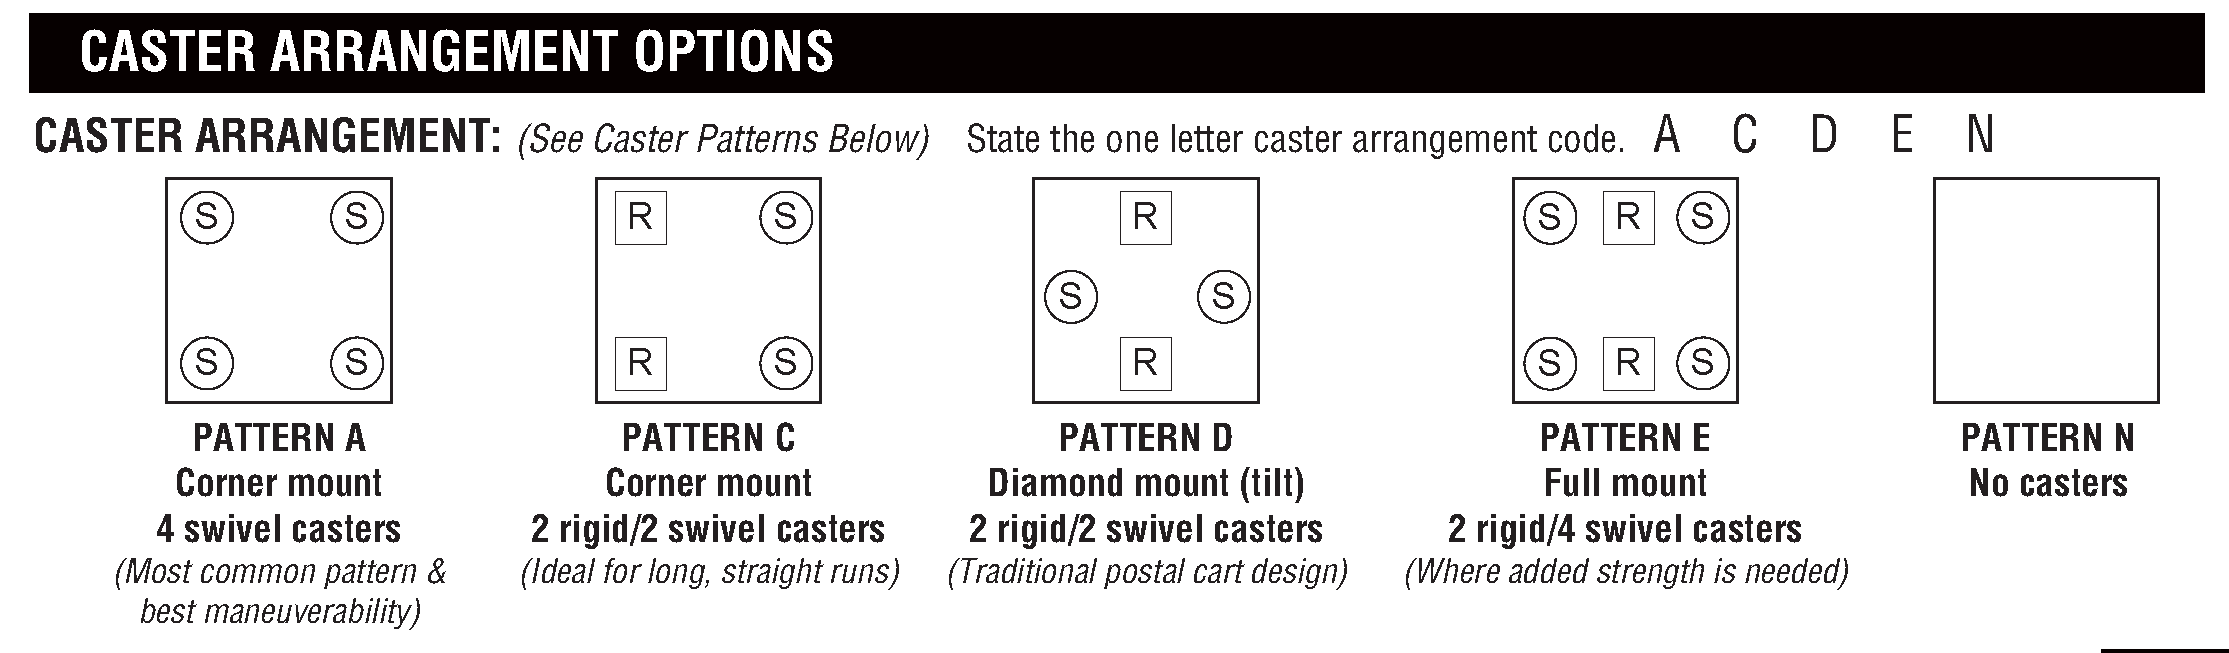 Caster Patterns